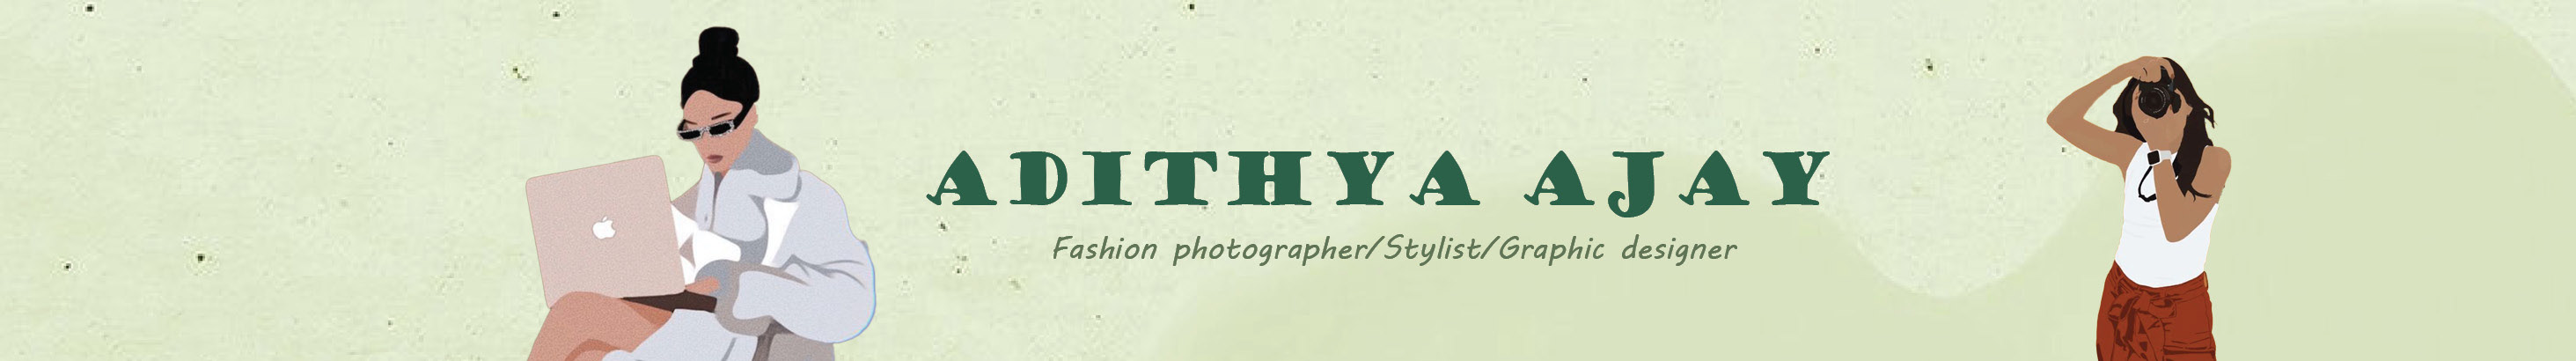 Banner de perfil de Adithya Ajay